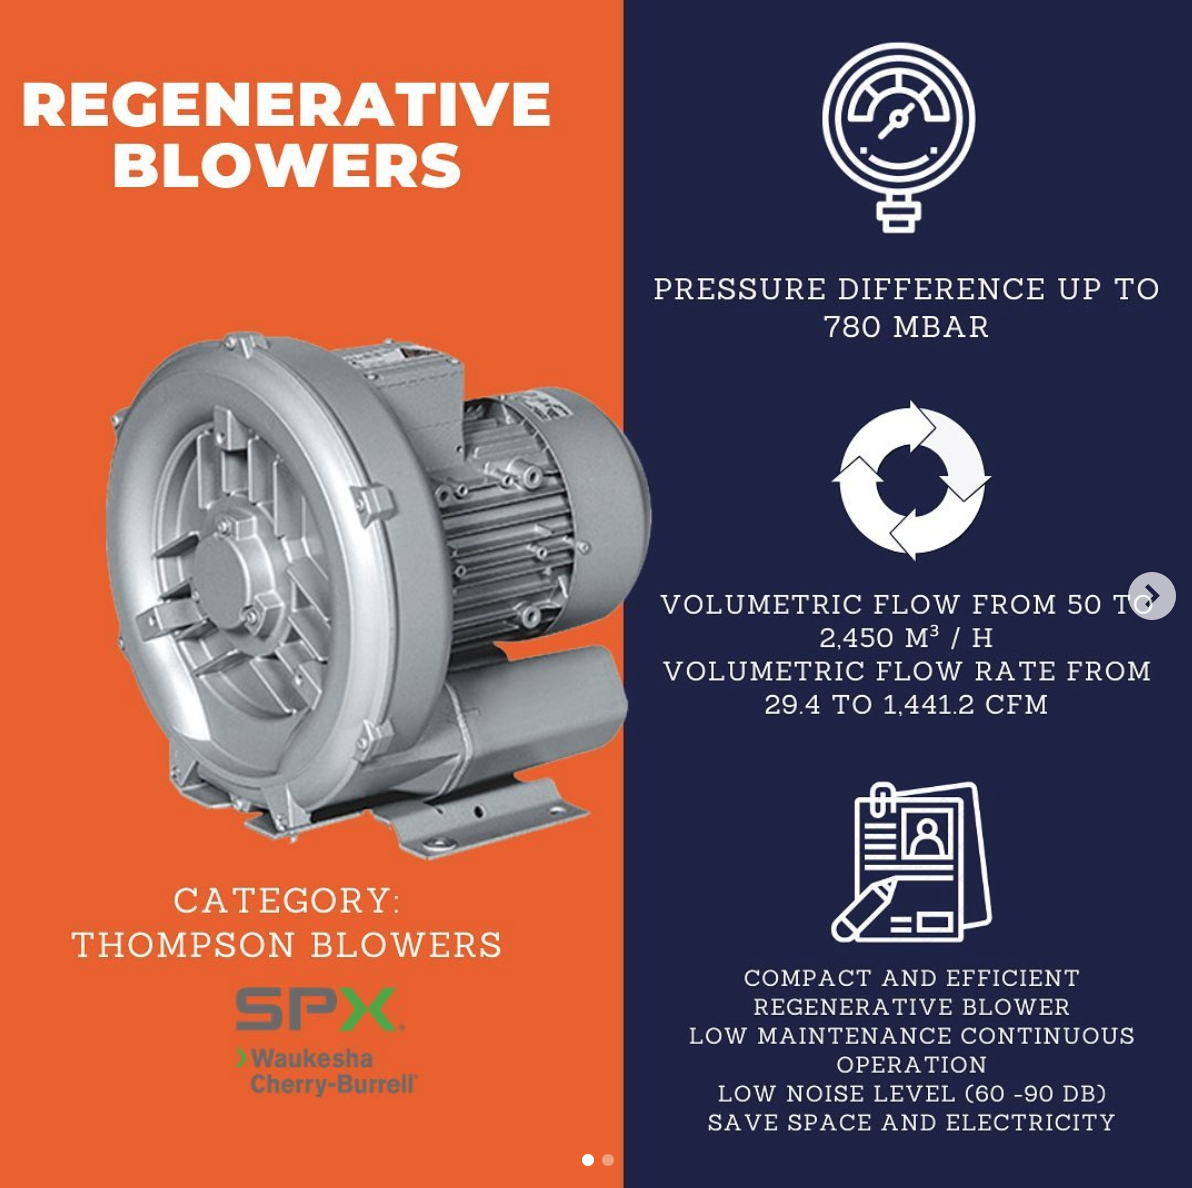 Advantages of regenerative blowers